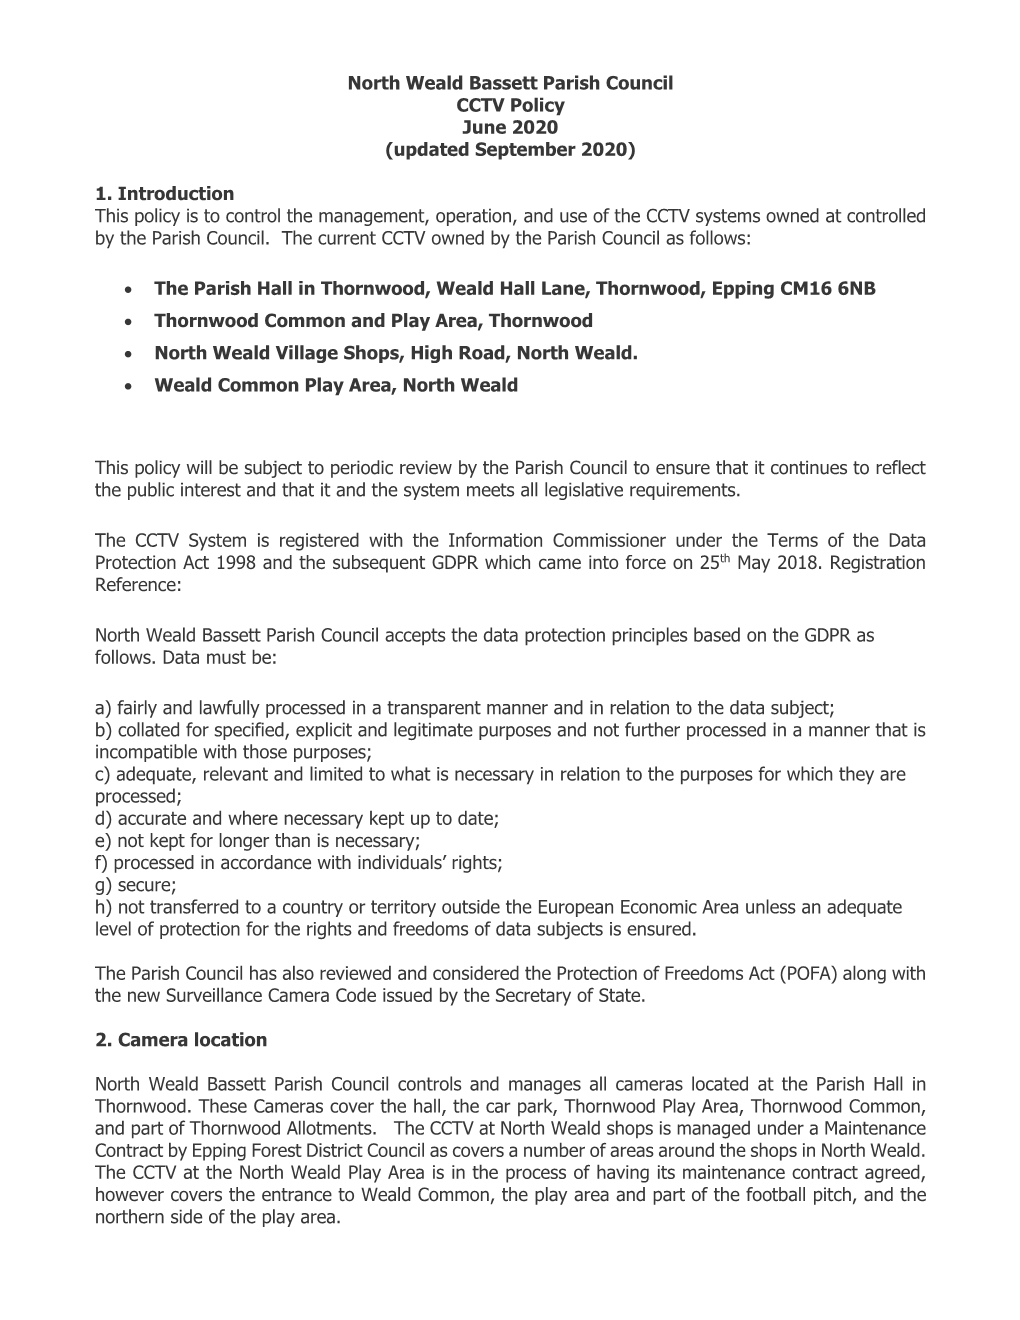 North Weald Bassett Parish Council CCTV Policy June 2020 (Updated September 2020)